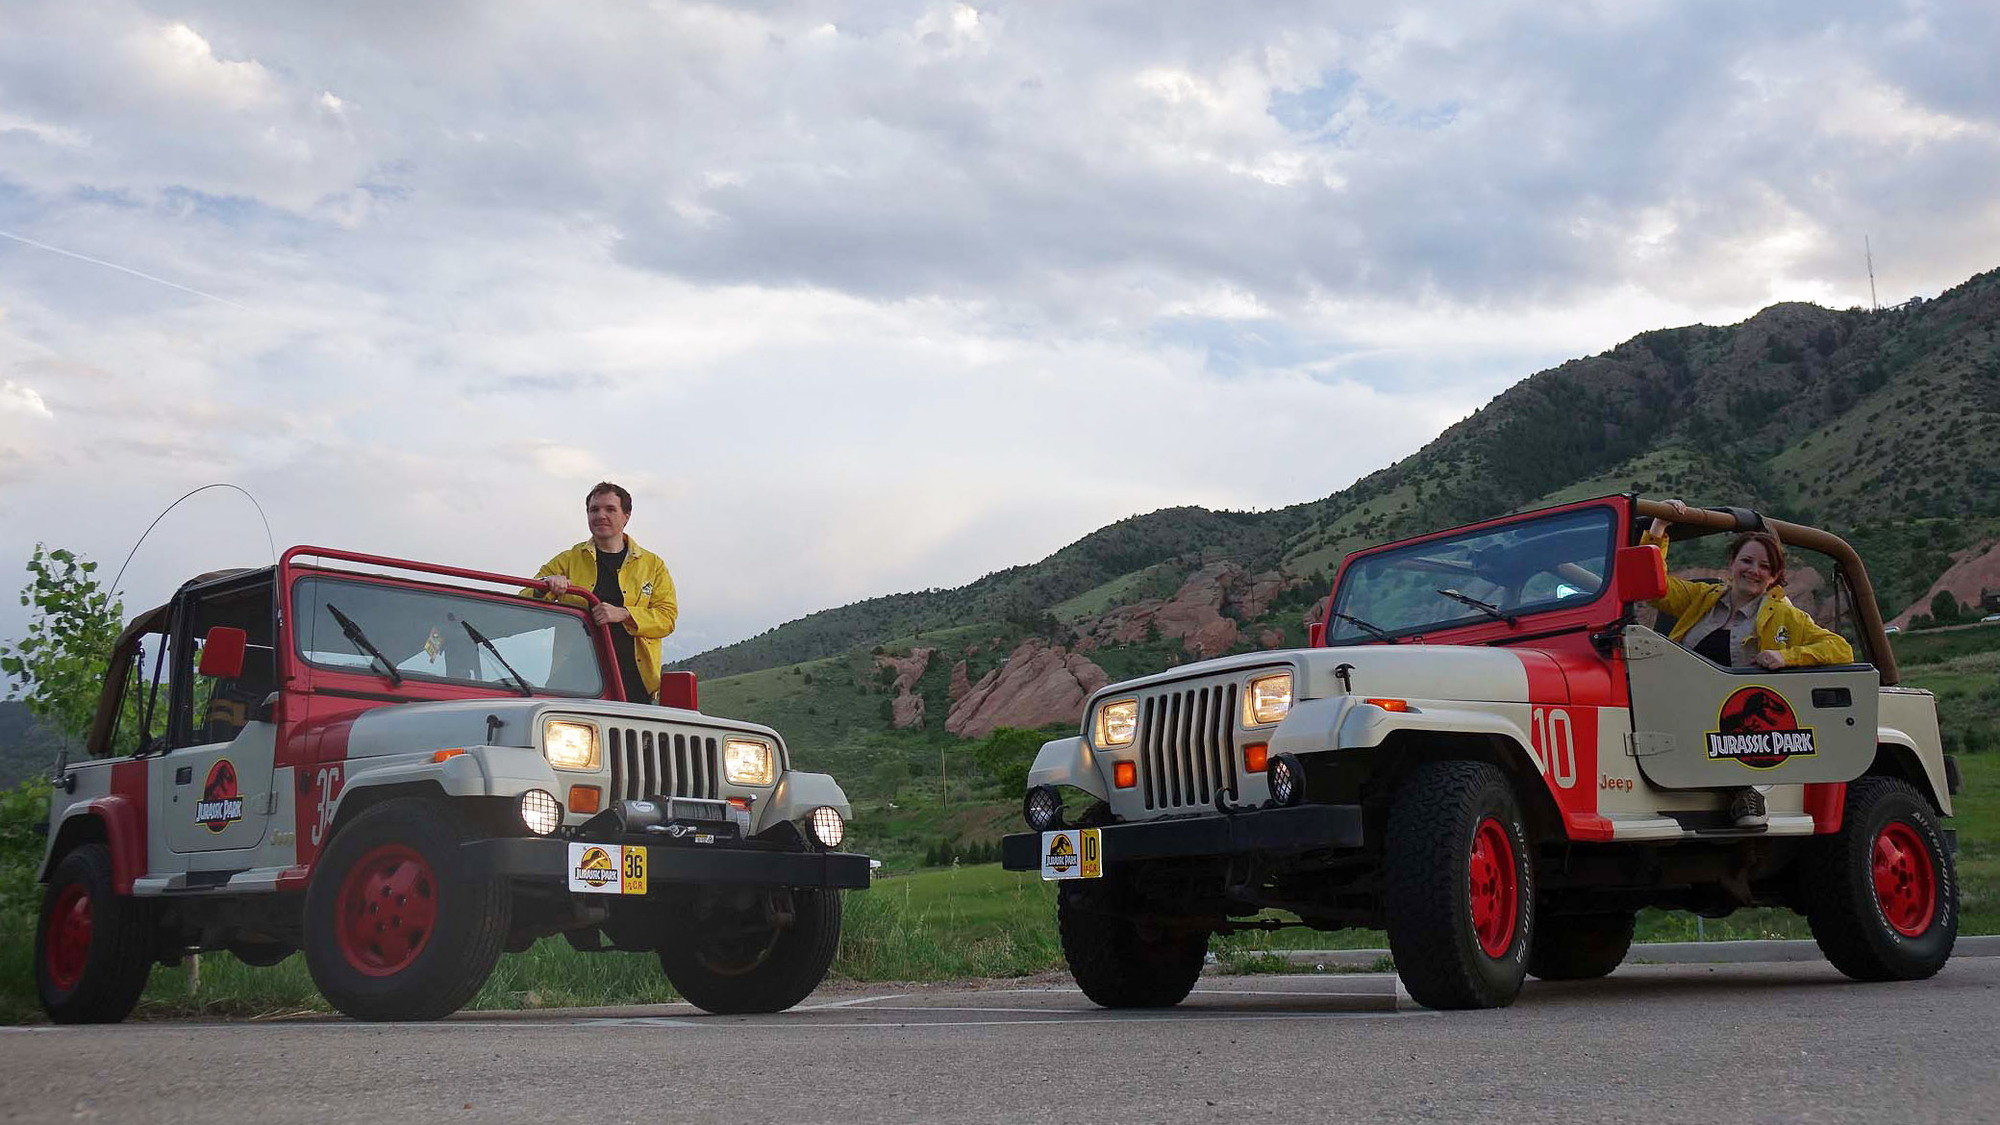 Jurassic Park INGEN Corporation Sticker Dinosaur fits Jeep Wrangler Car decals